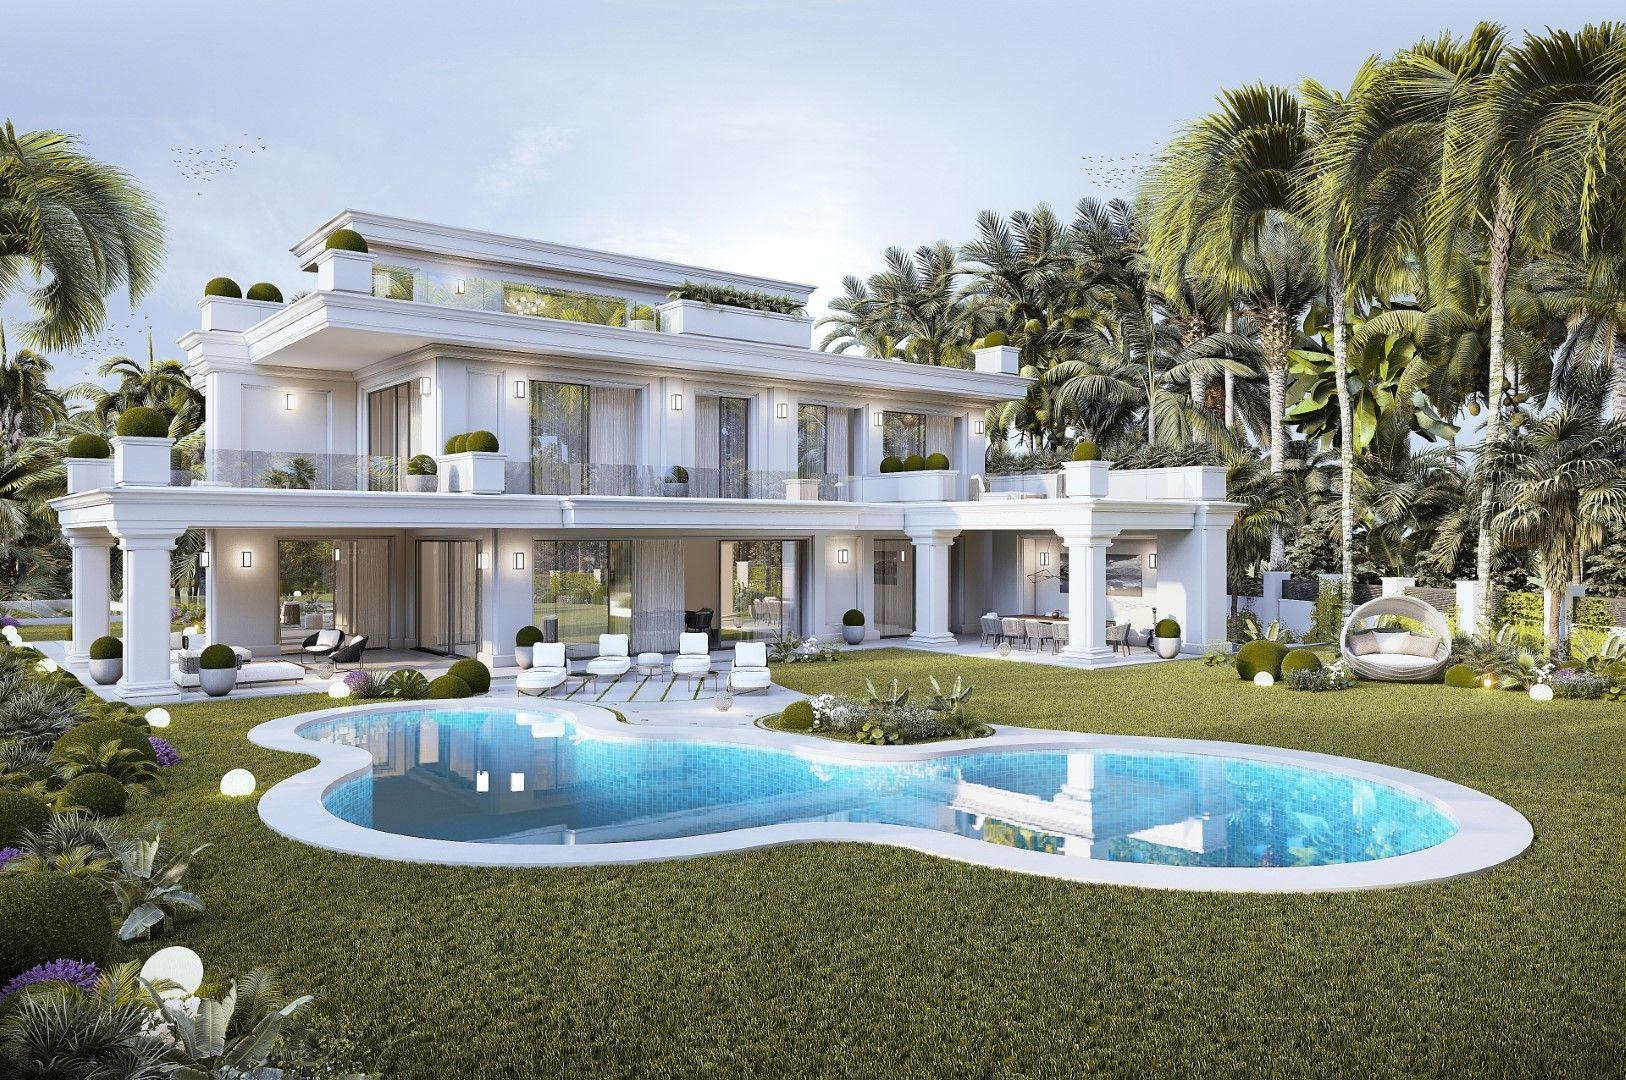 5 bedroom house / villa for sale in Marbella, Costa del Sol